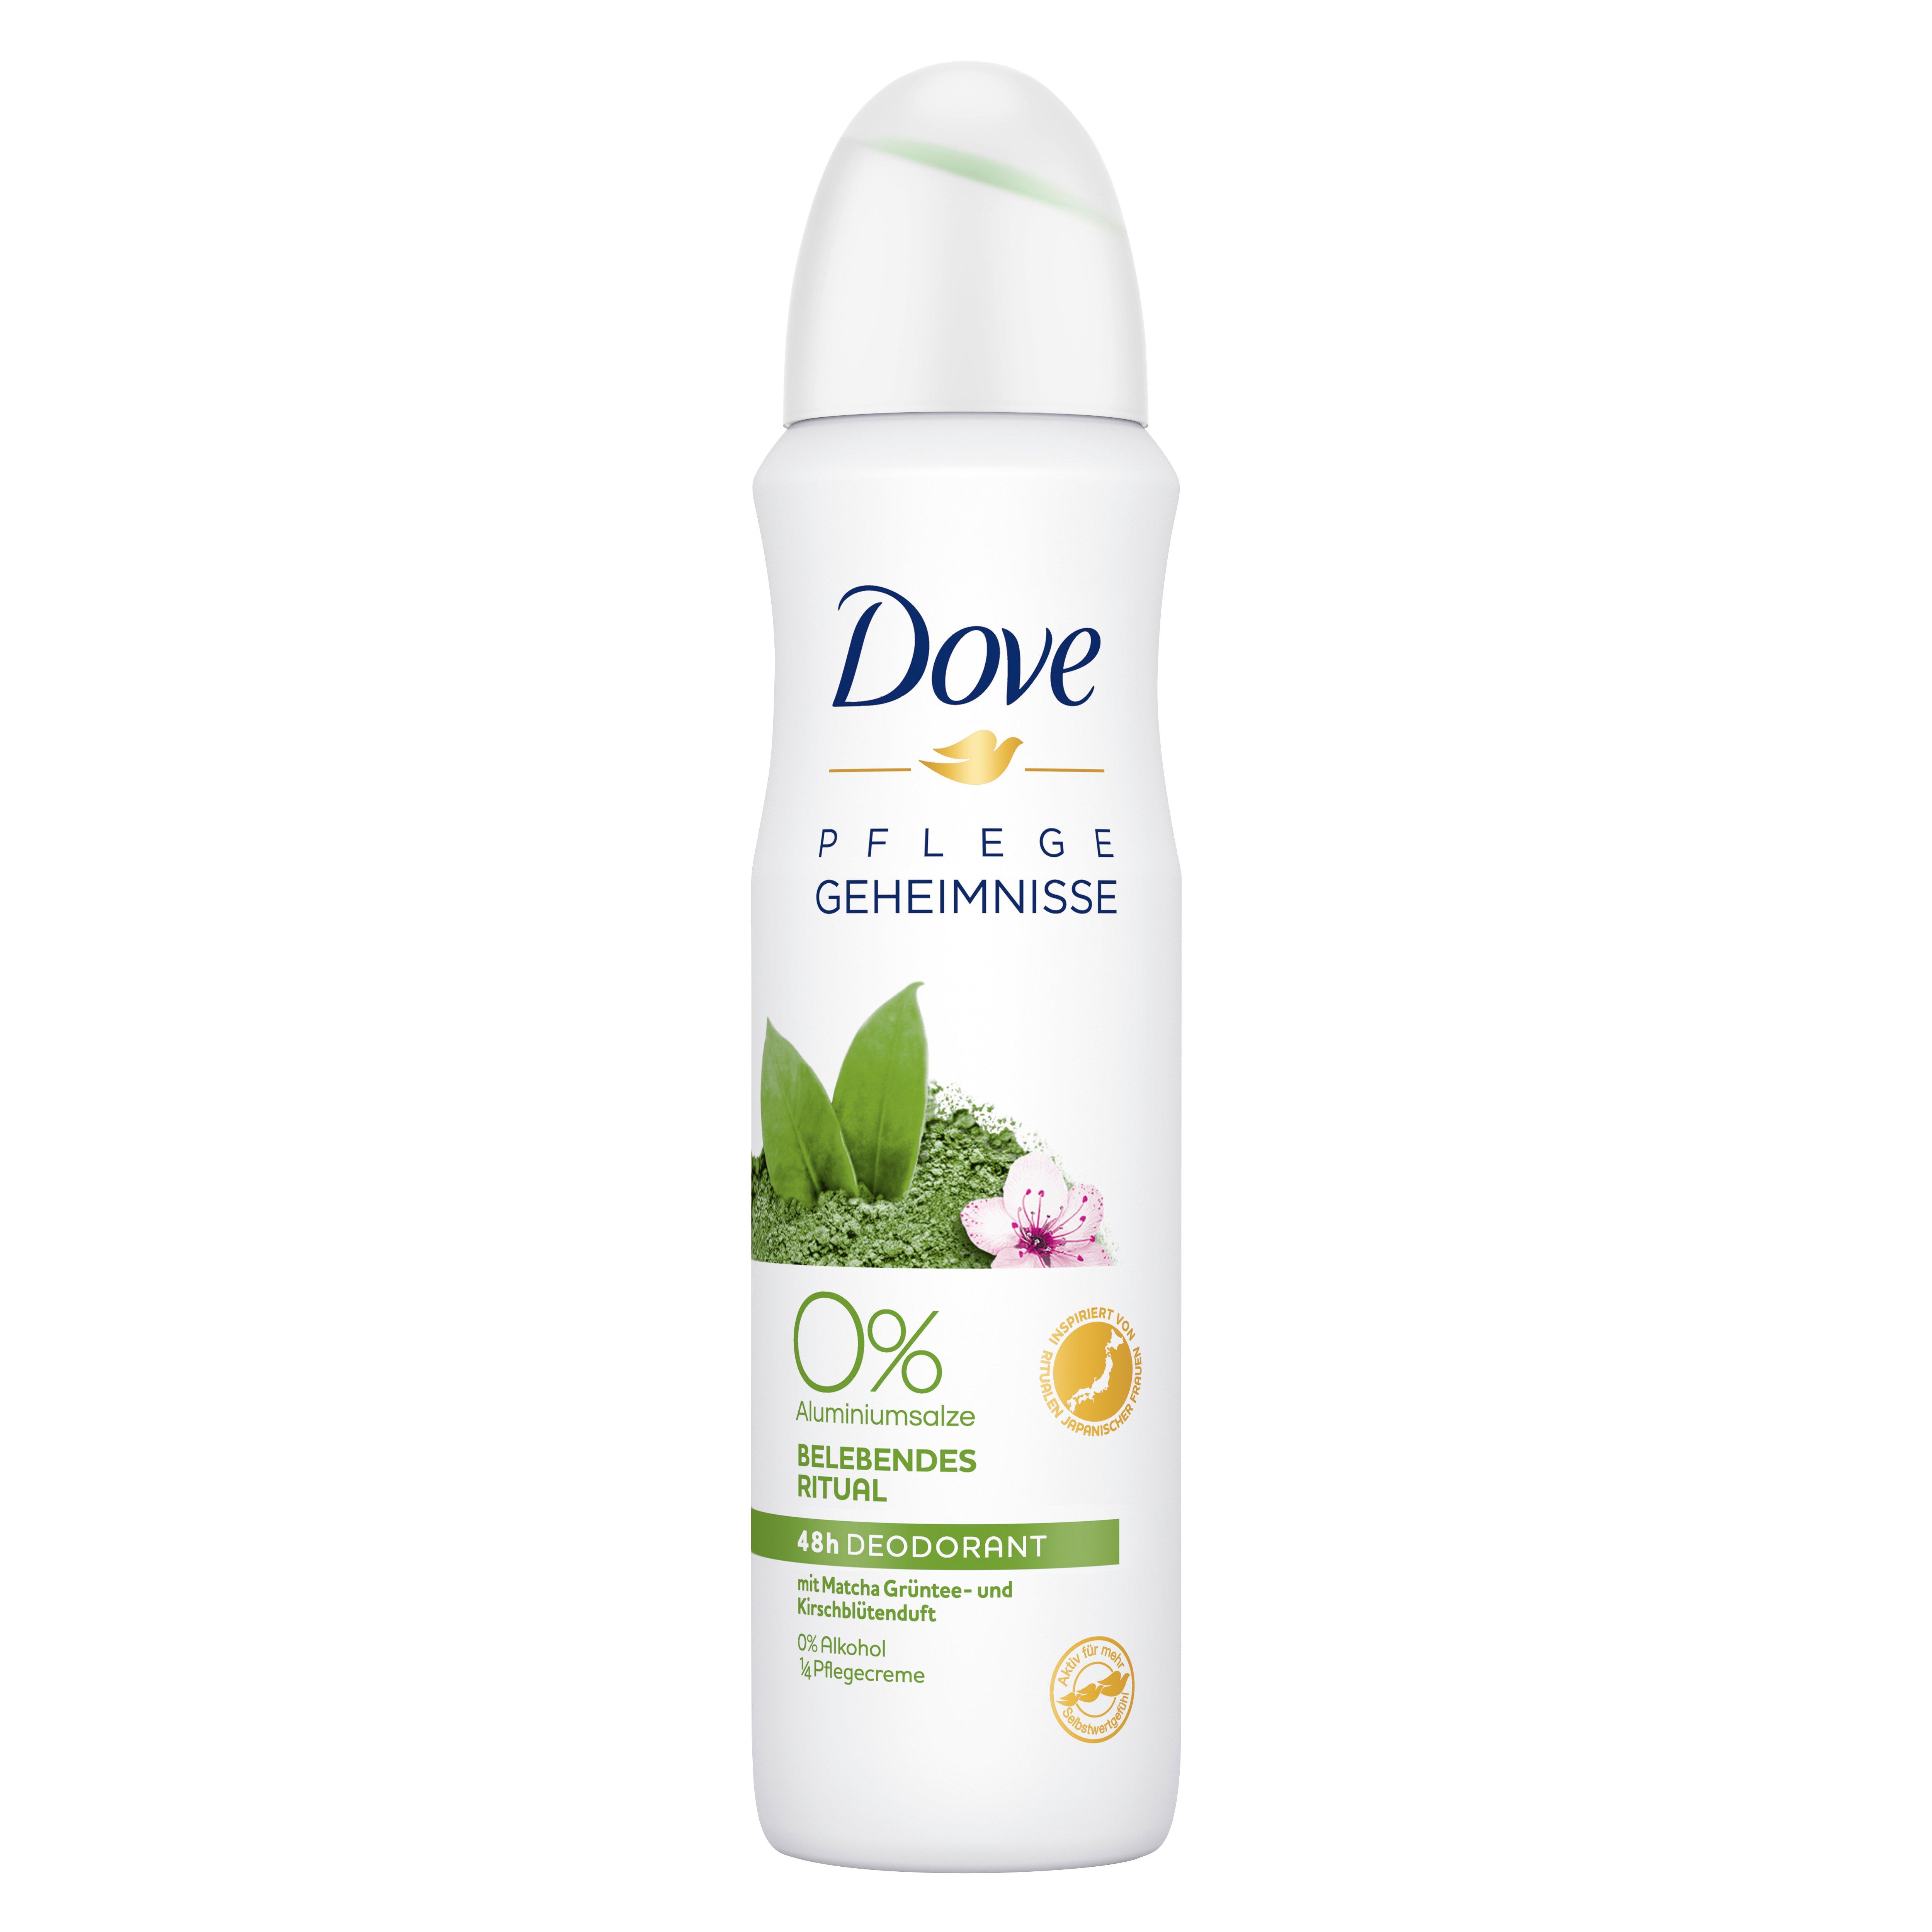 Image of Dove Deodorant Pflegegeheimnisse Belebendes Ritual mit Matcha Grüntee- und Kirschblütenduft 0% Aluminiumsalze - 150 ml